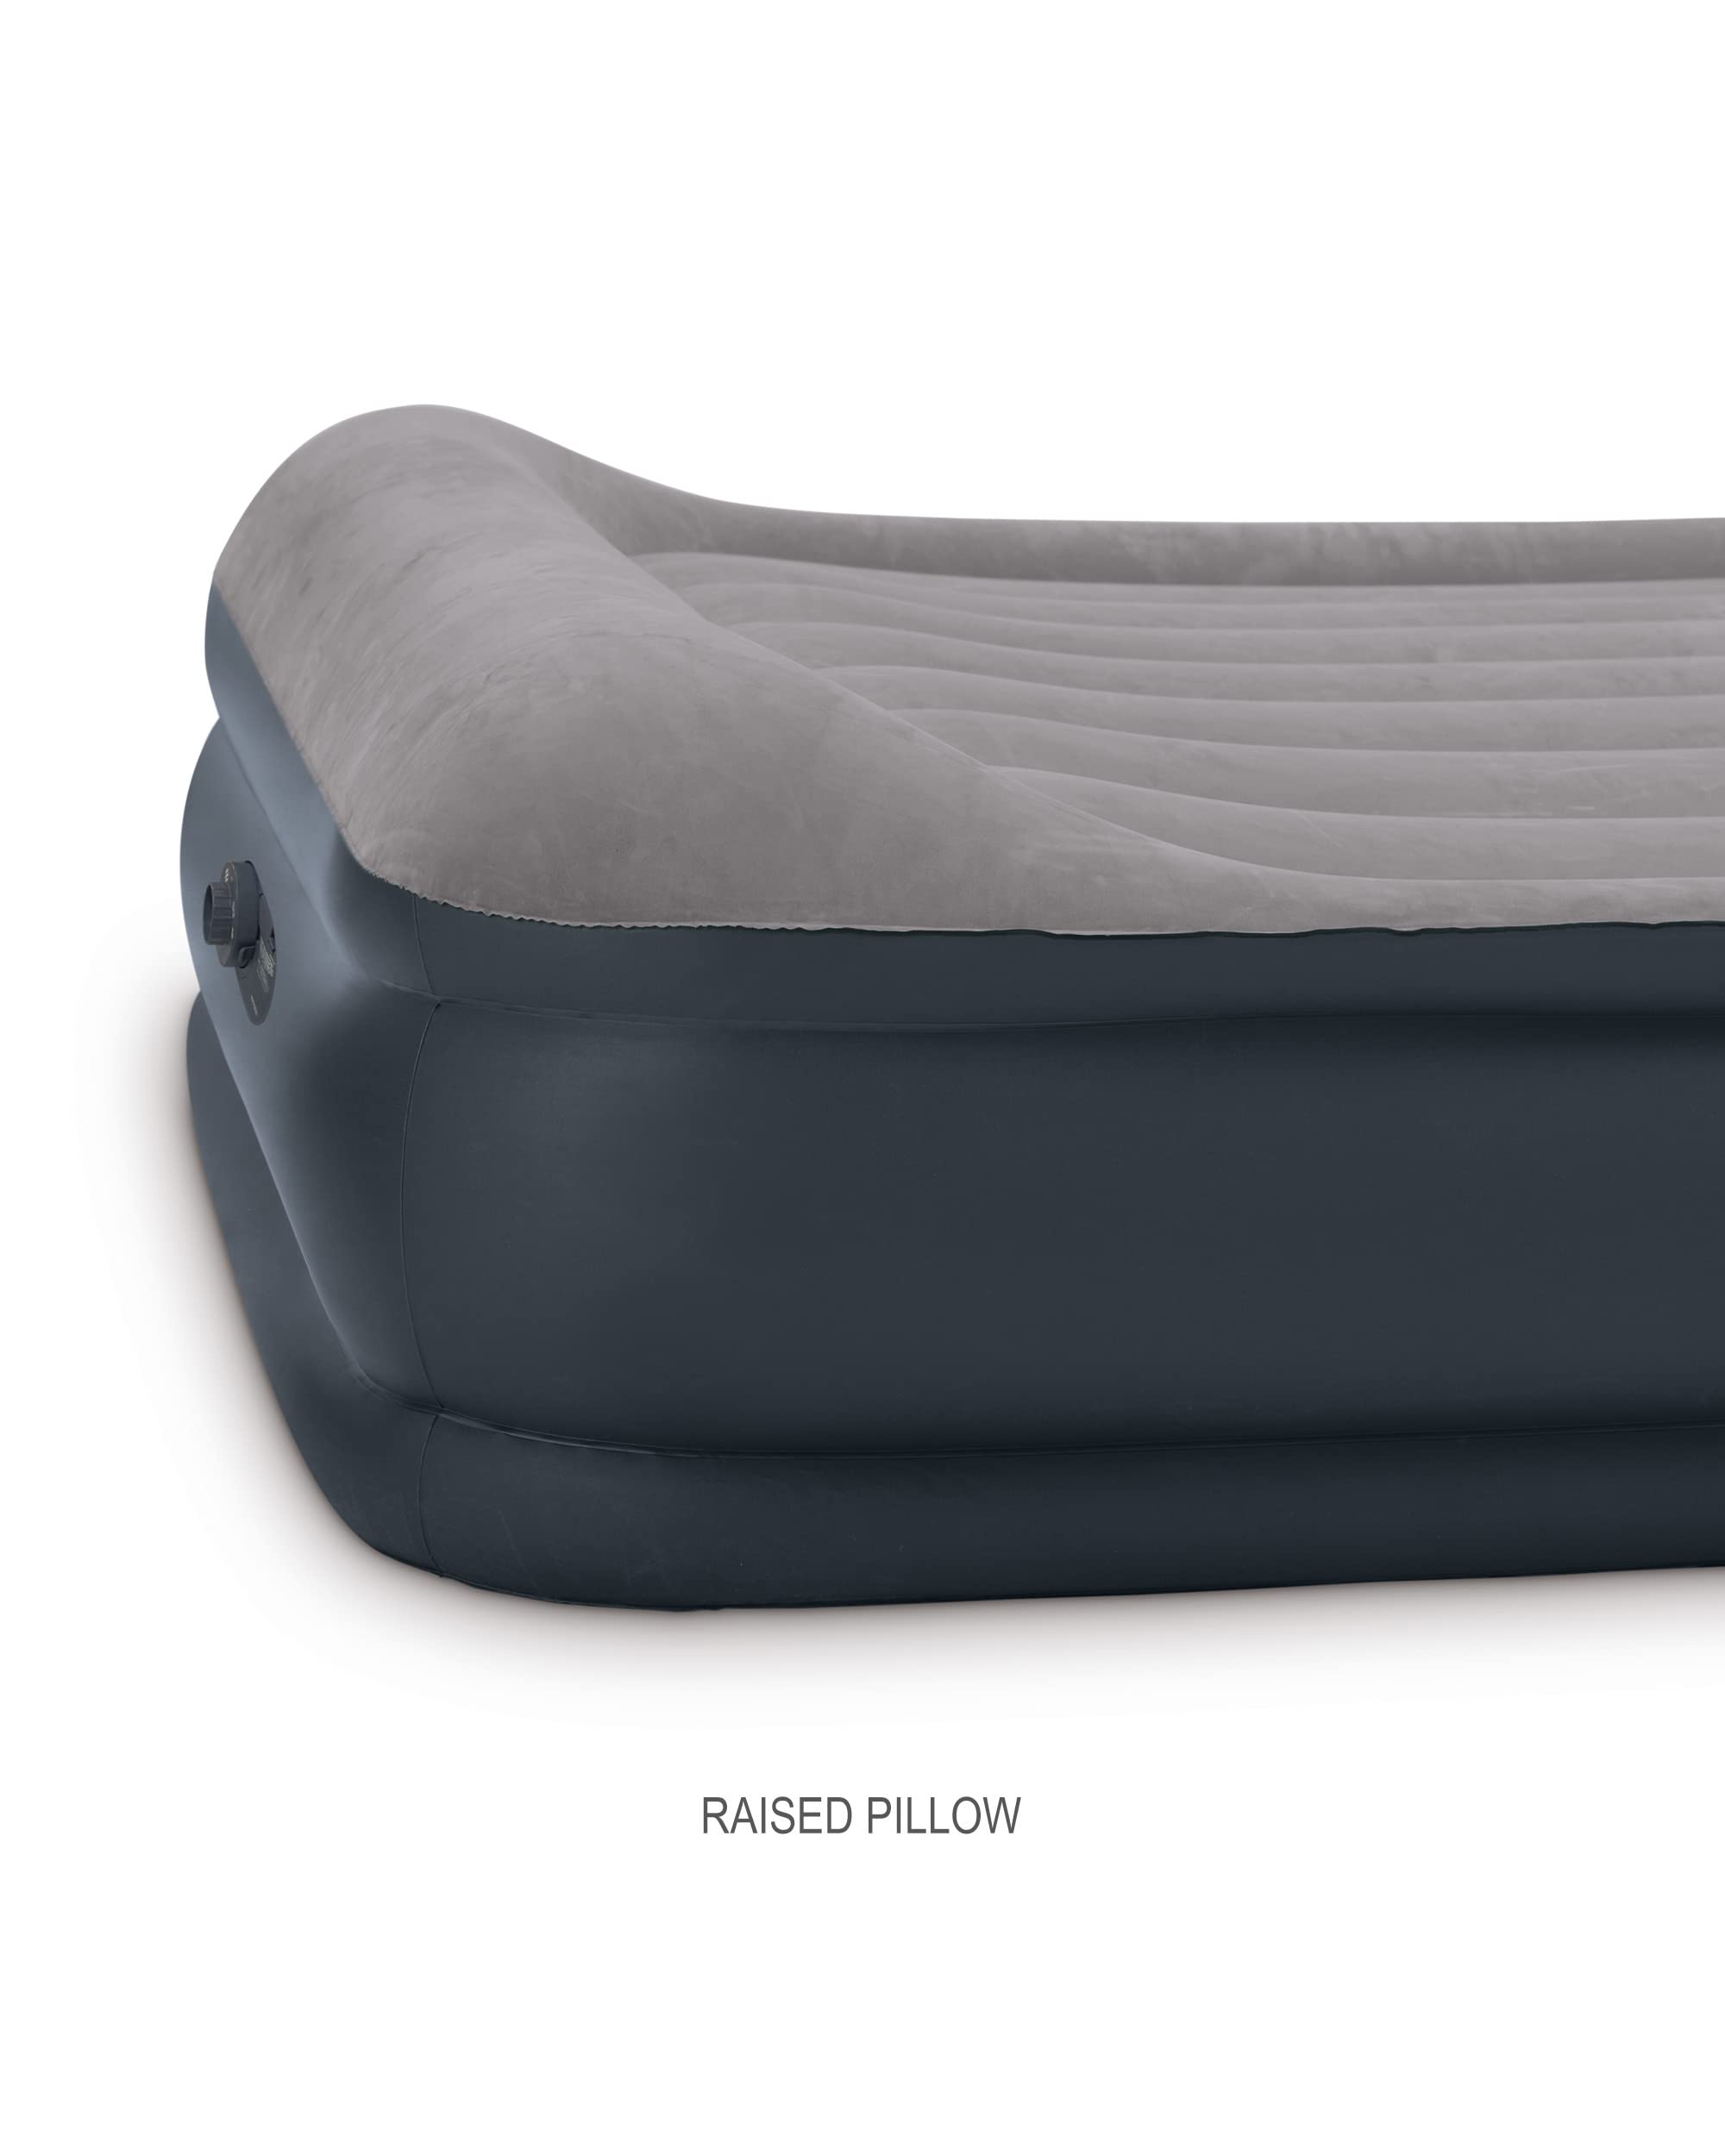 INTEX 64135ED Dura-Beam Plus Deluxe Pillow Rest Air Mattress: Fiber-Tech – Queen Size – Built-in Electric Pump – 16.5in Bed Height – 600lb Weight Capacity